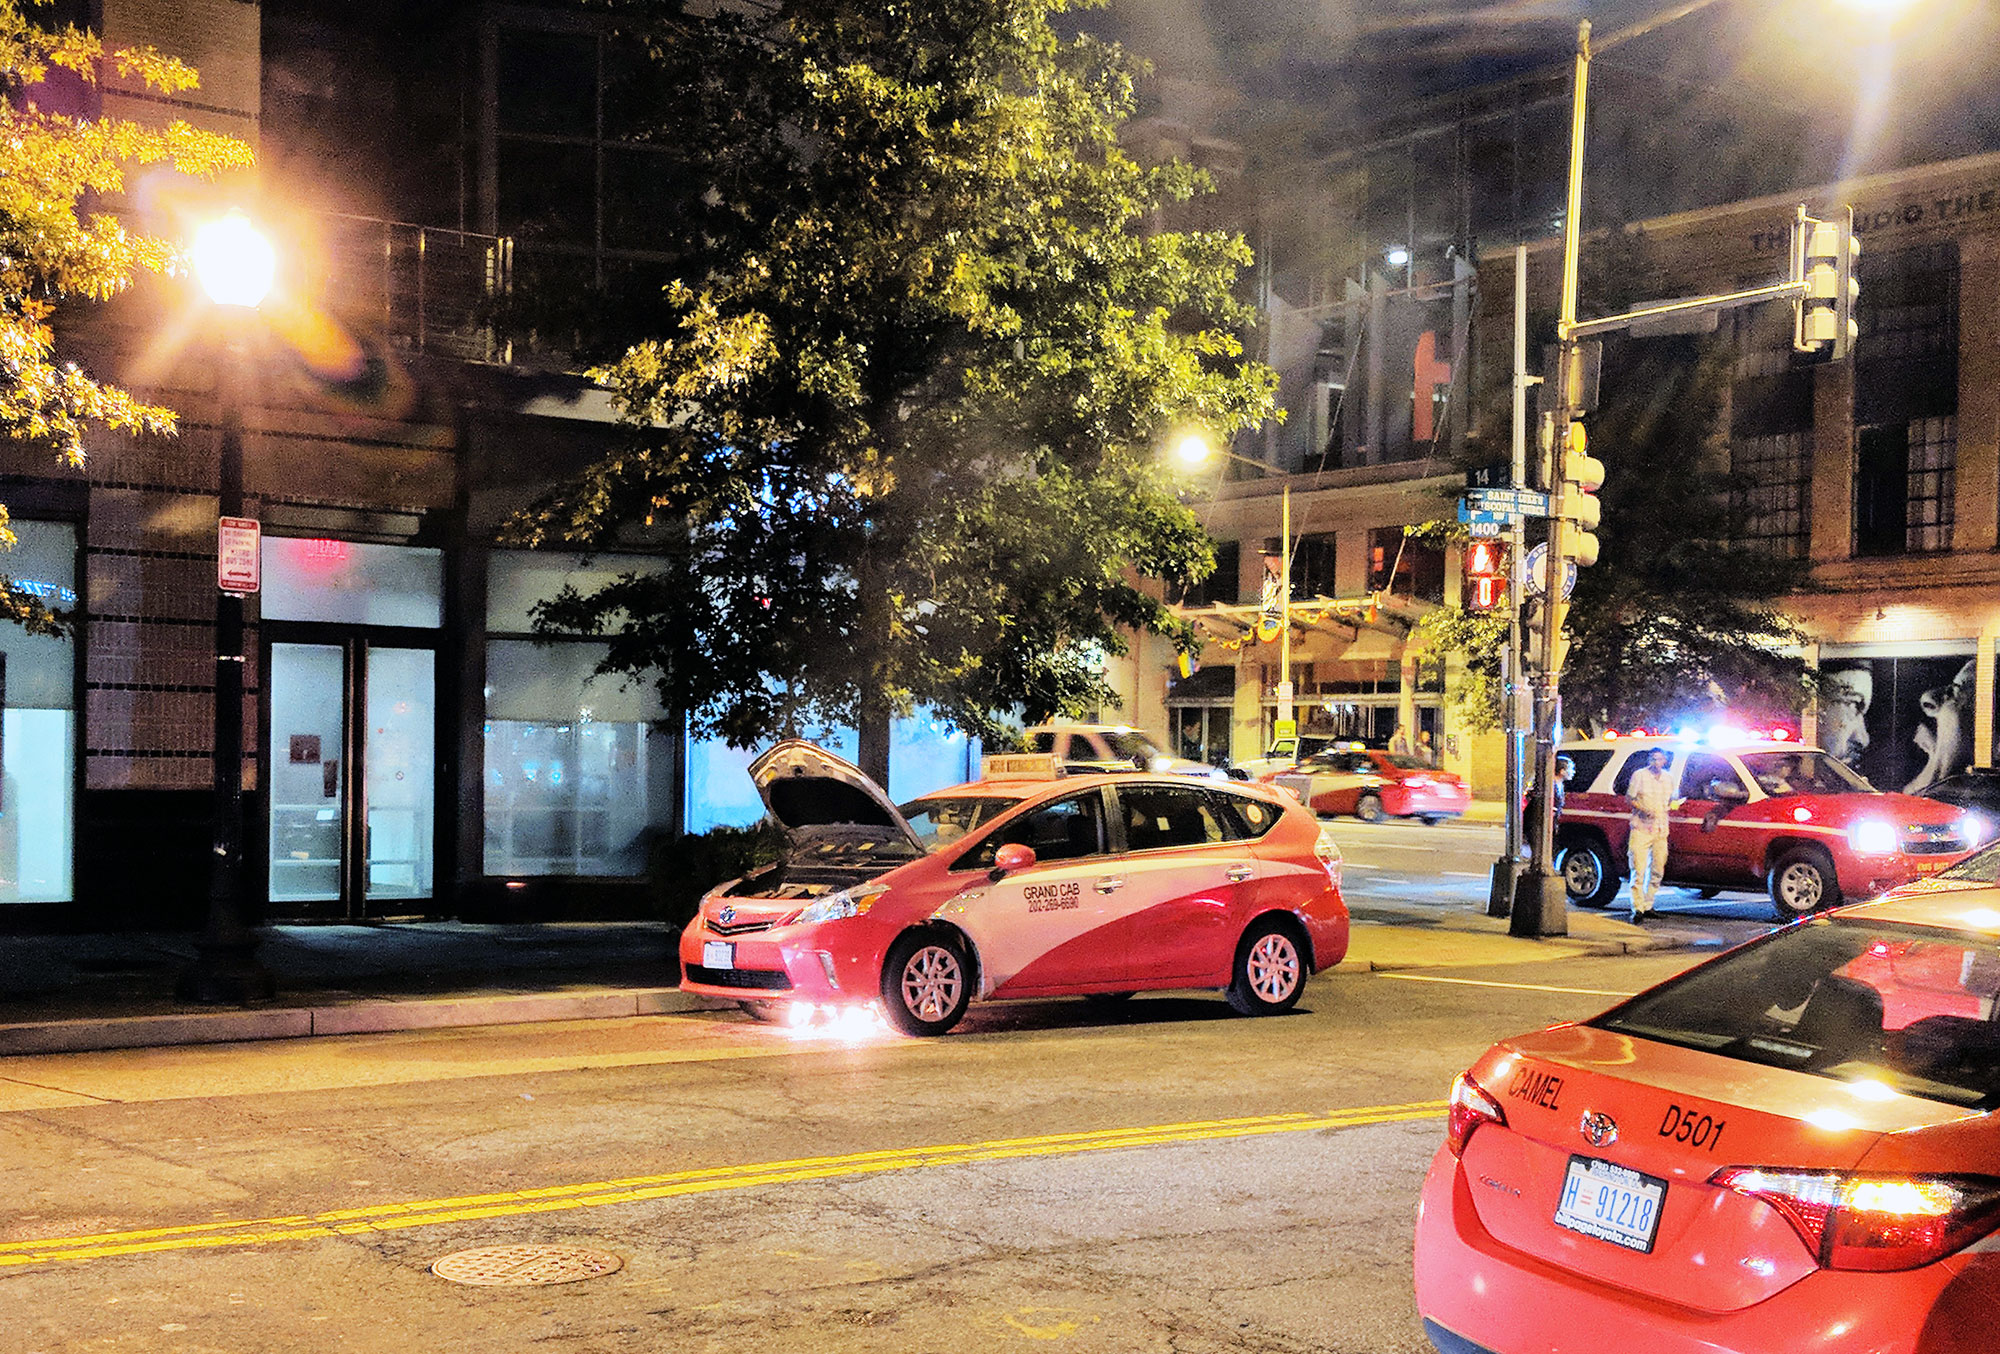 A cab on fire in the Logan Circle neighborhood of Washington D.C.